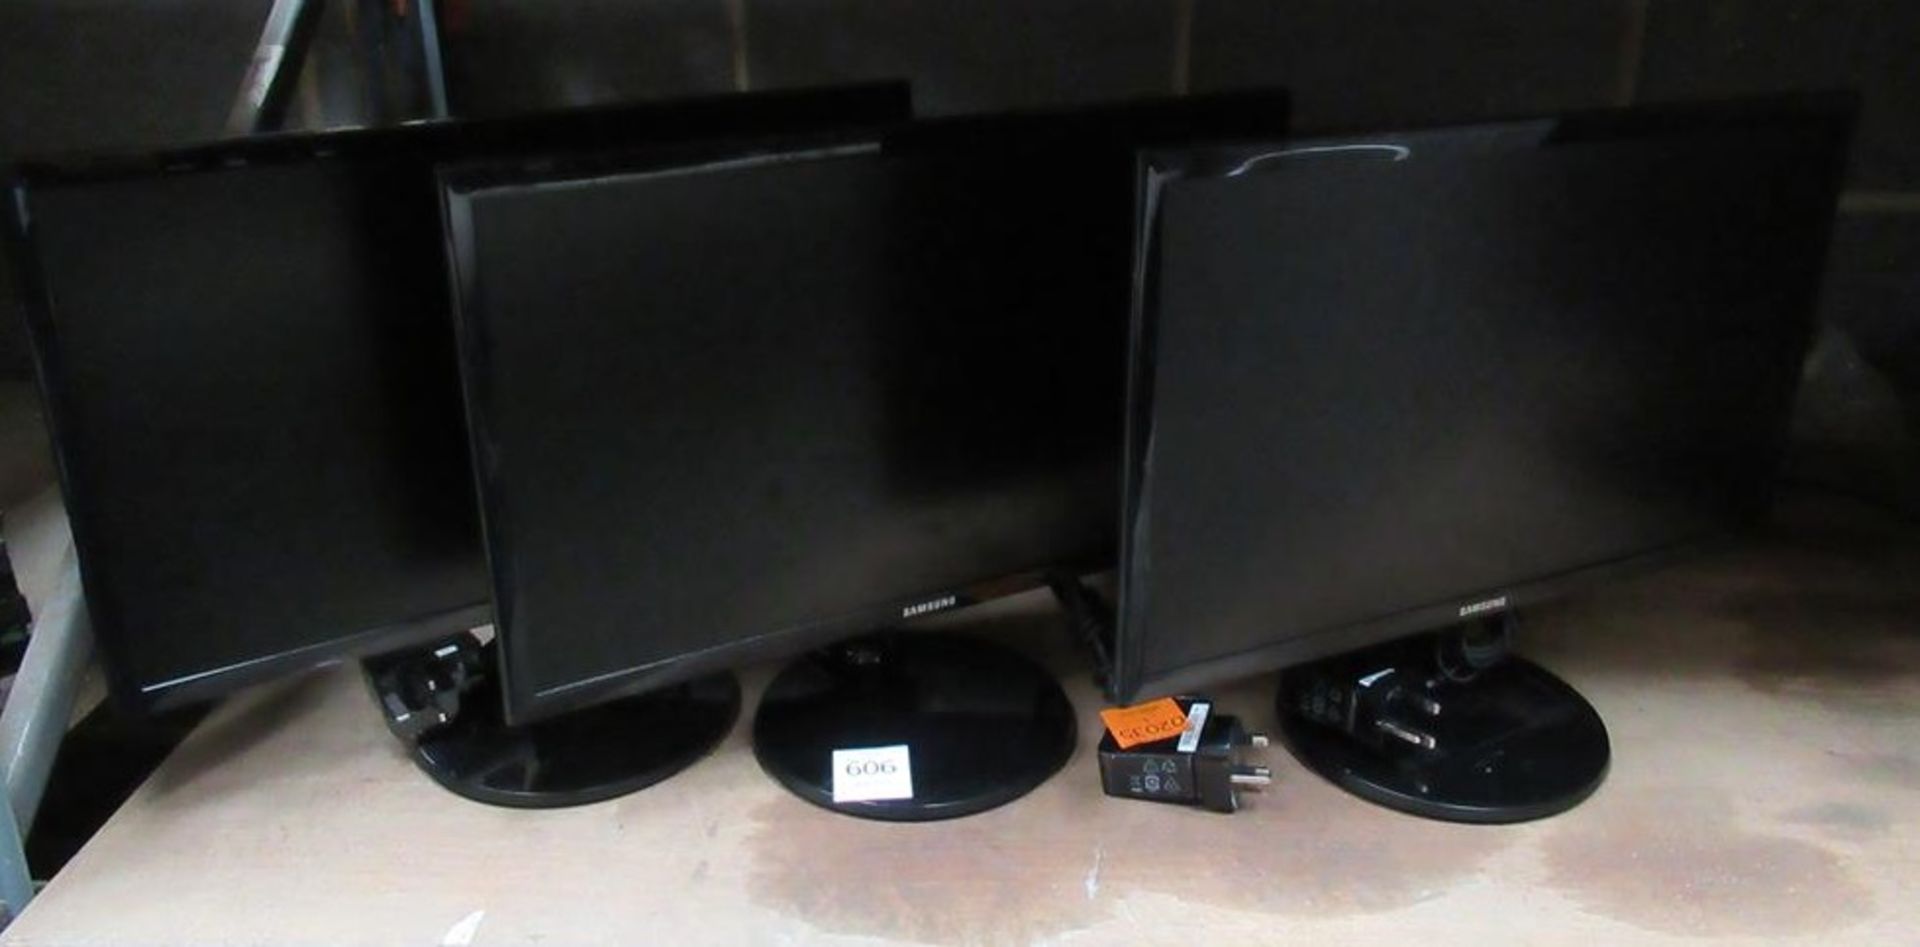 3 x Samsung monitors